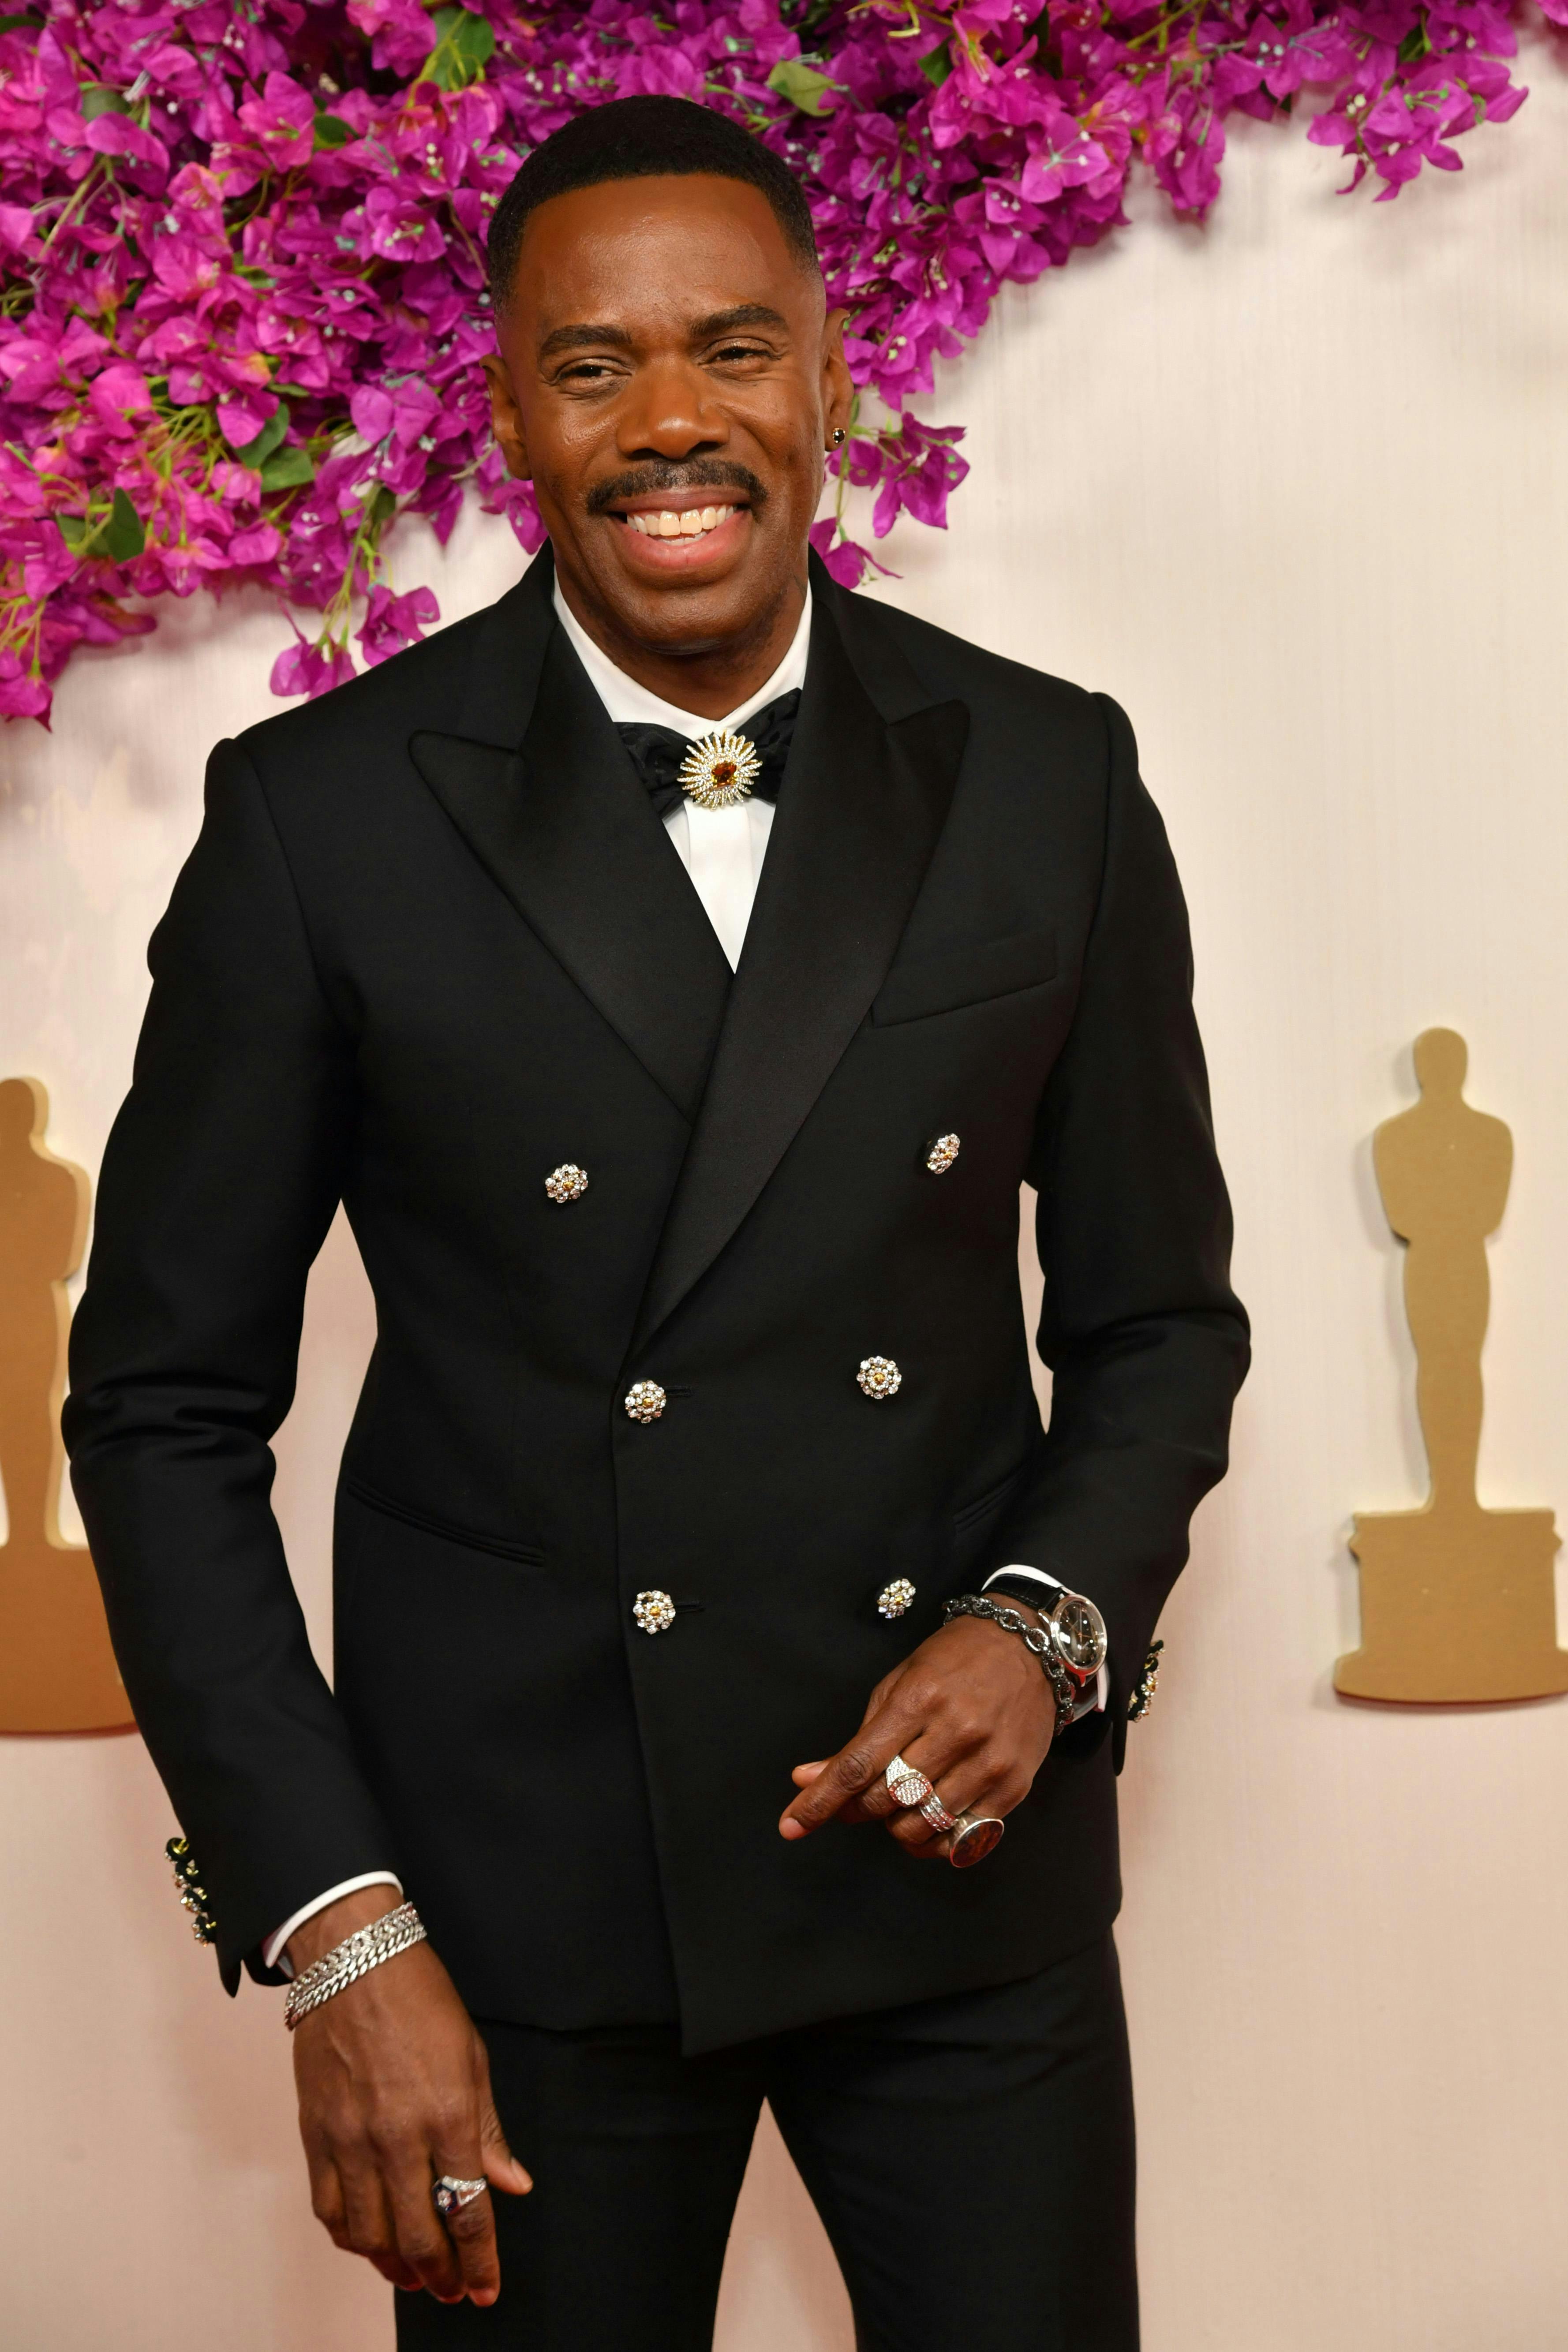 hollywood formal wear suit head person face bracelet smile adult male man